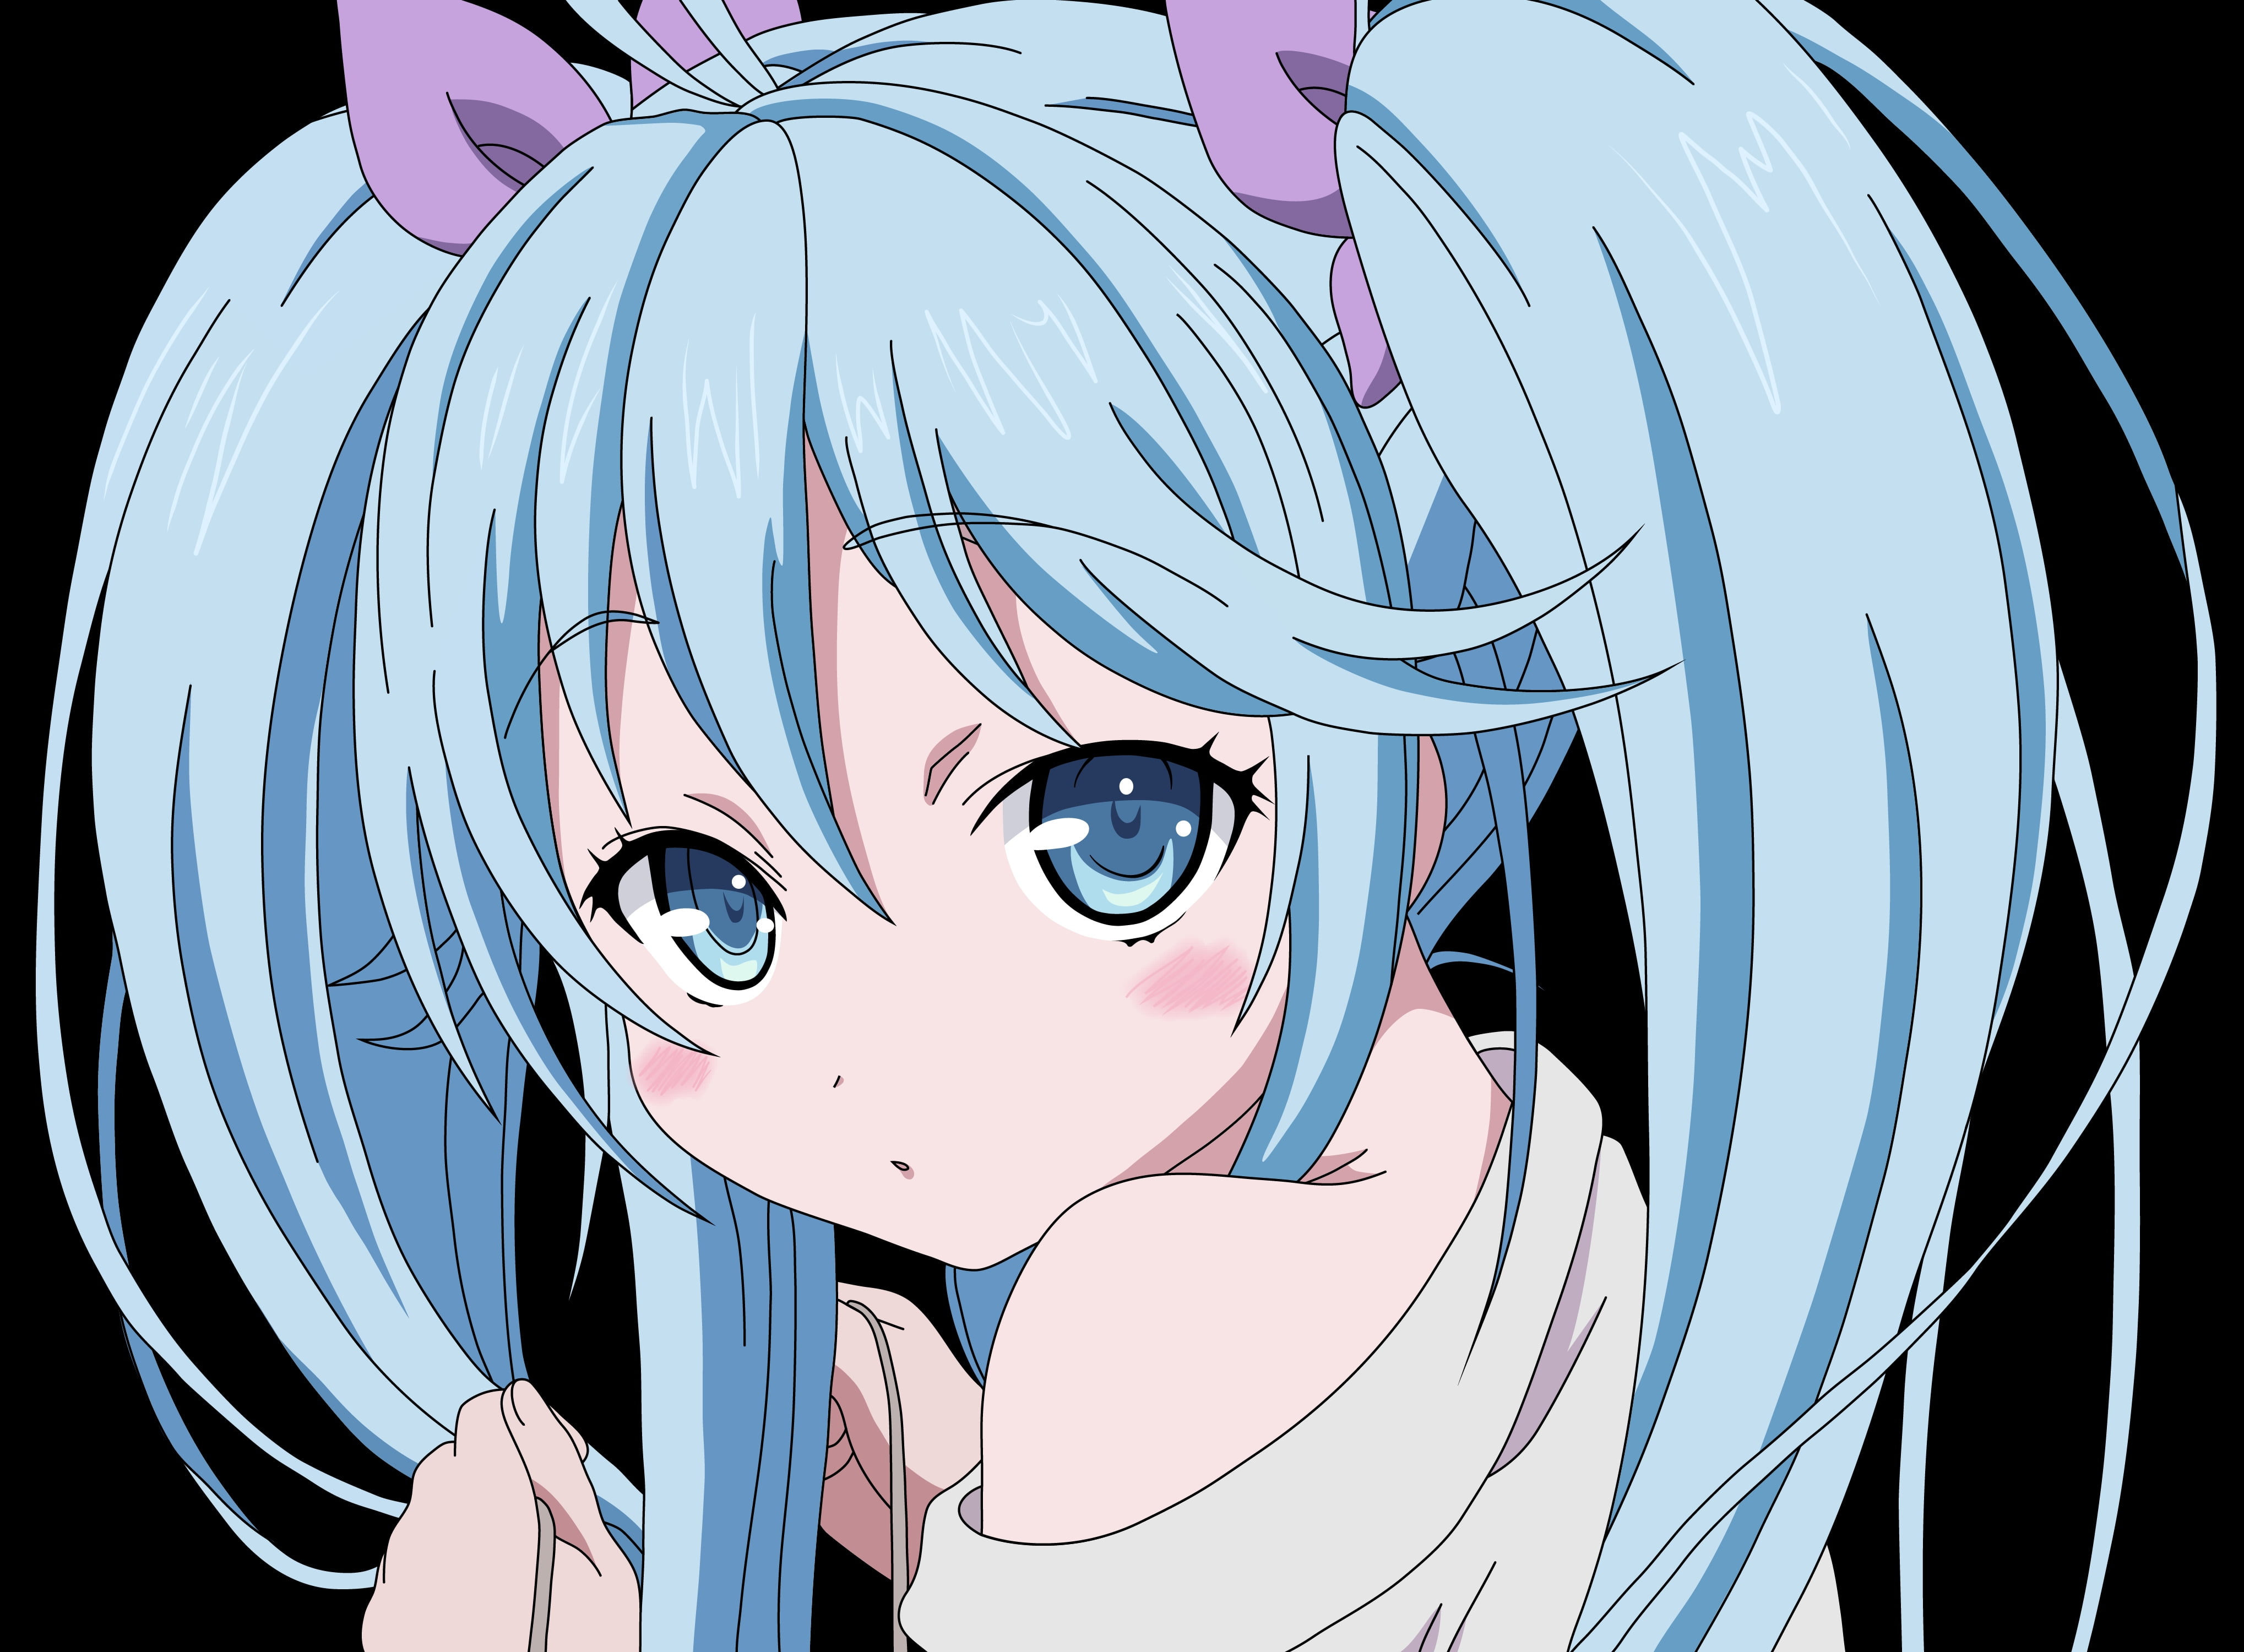 "anime character with baby blue hair" 
5. "Yui Hirasawa" - wide 11